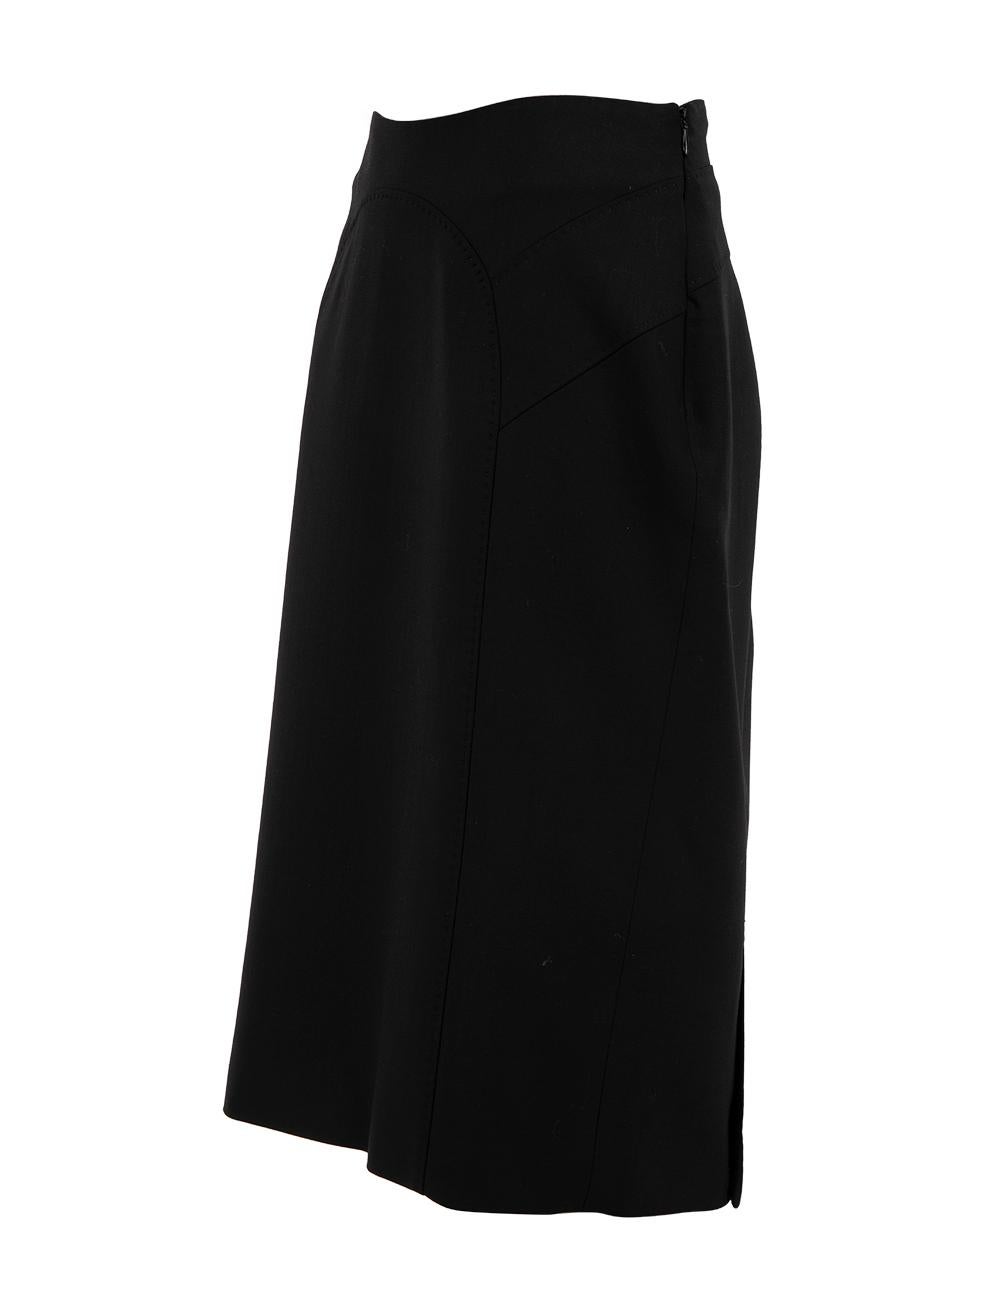 Pre-Loved Amanda Wakeley Women's Black Wool Fitted Pencil Skirt 1